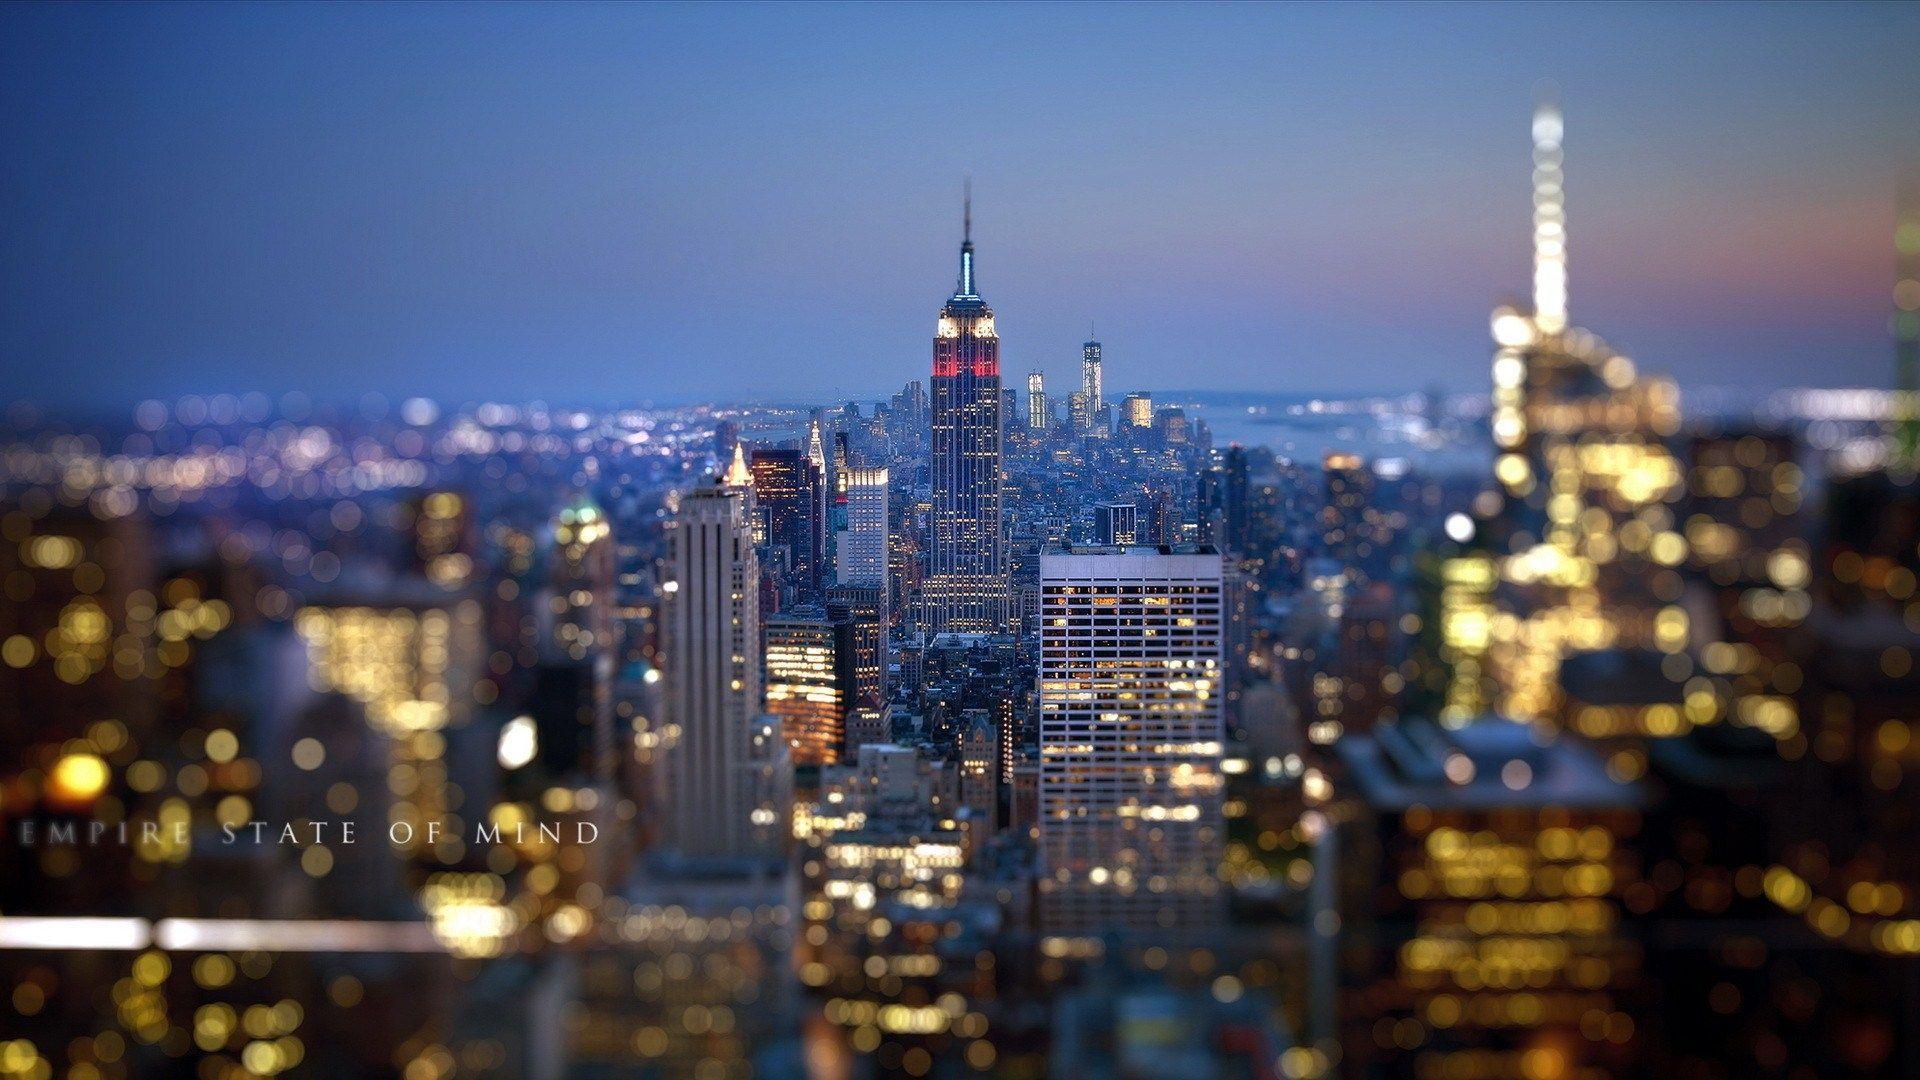 Empire State New York Photo. HD Wallpaper 2015